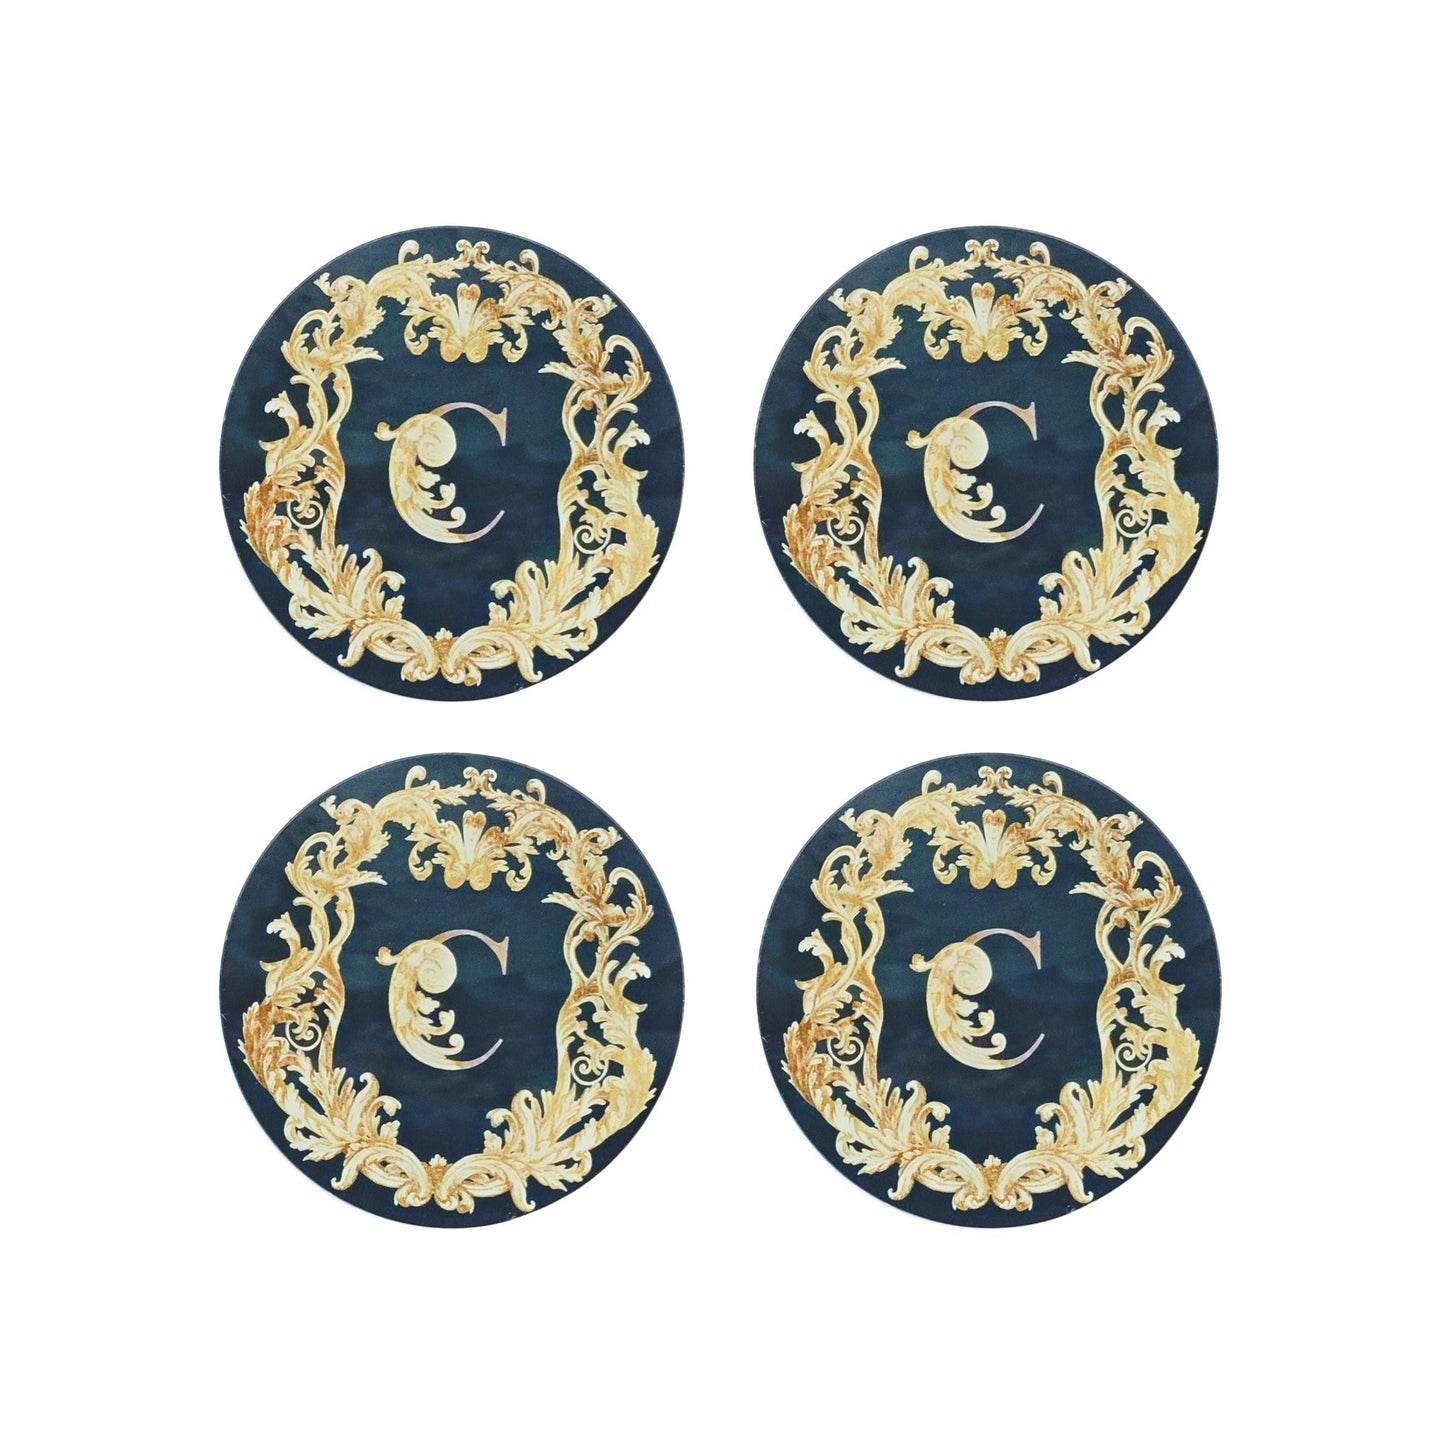 Custom Antique Rococo Crest Double-Sided Acrylic Coaster Set